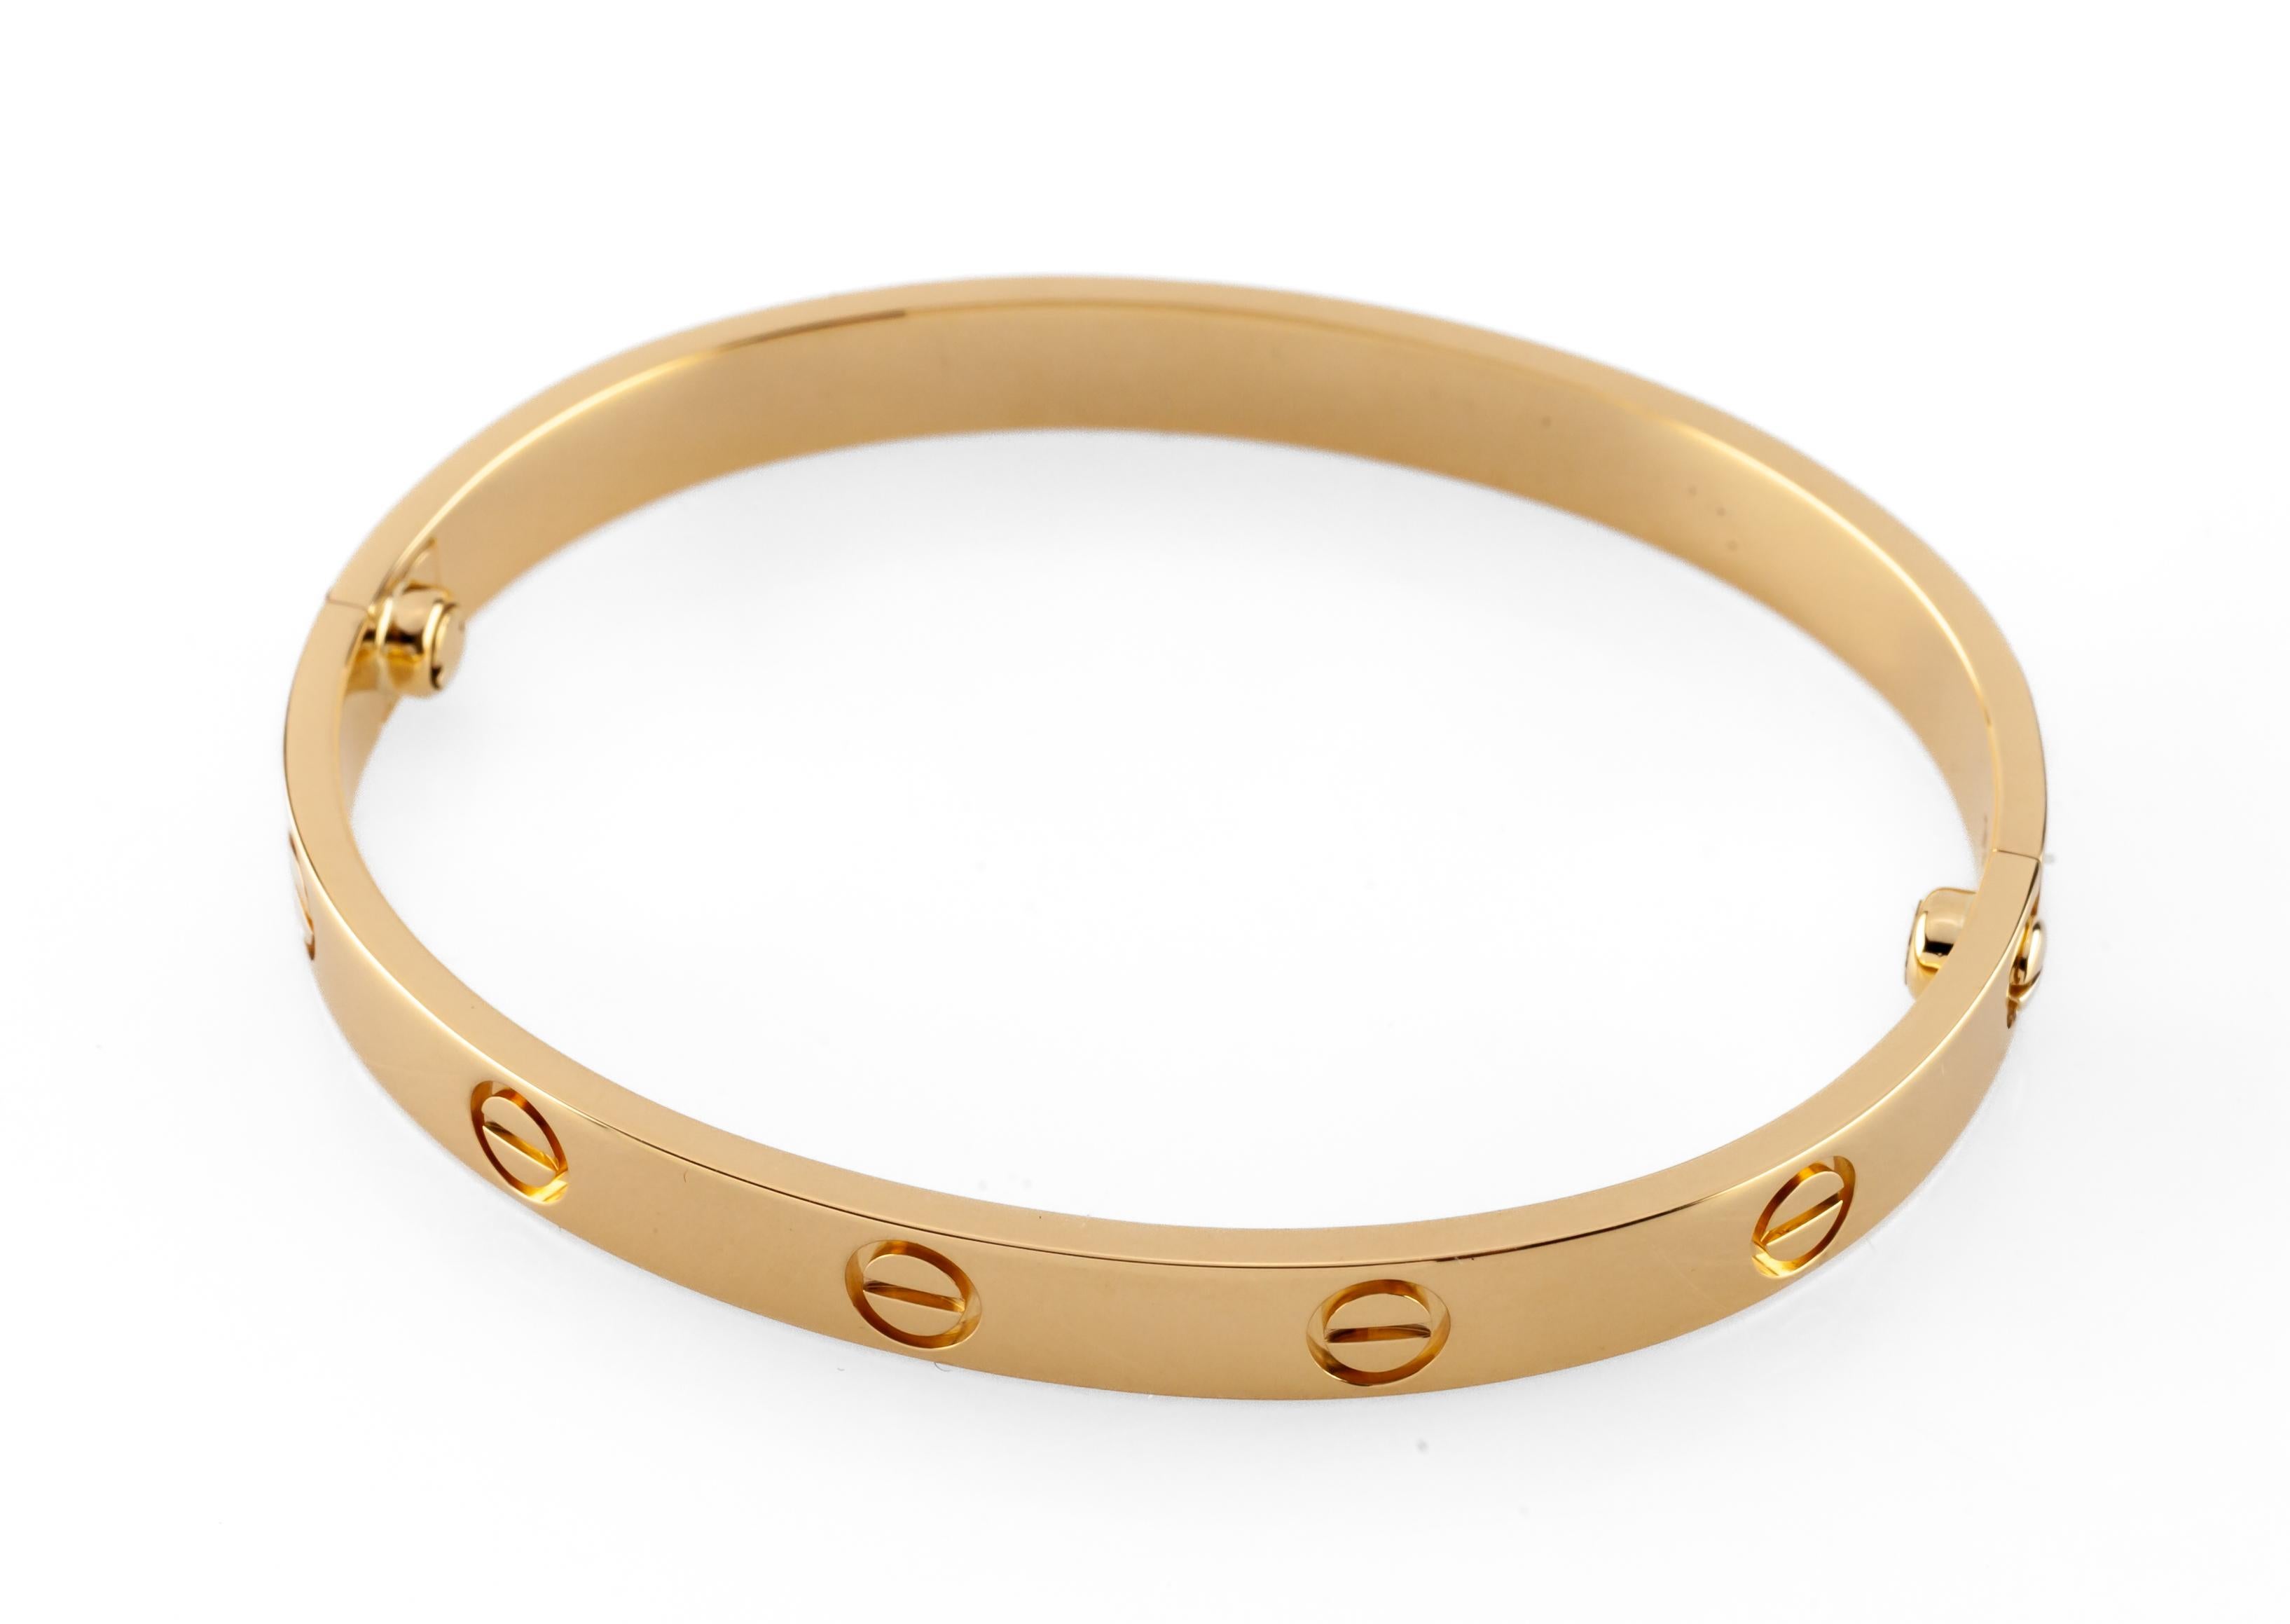 Cartier Yellow Gold LOVE Bracelet for Men+Free Screwdriver (REF: B6035516)  - Cartier Love Bracelets - Cartier Jewelry